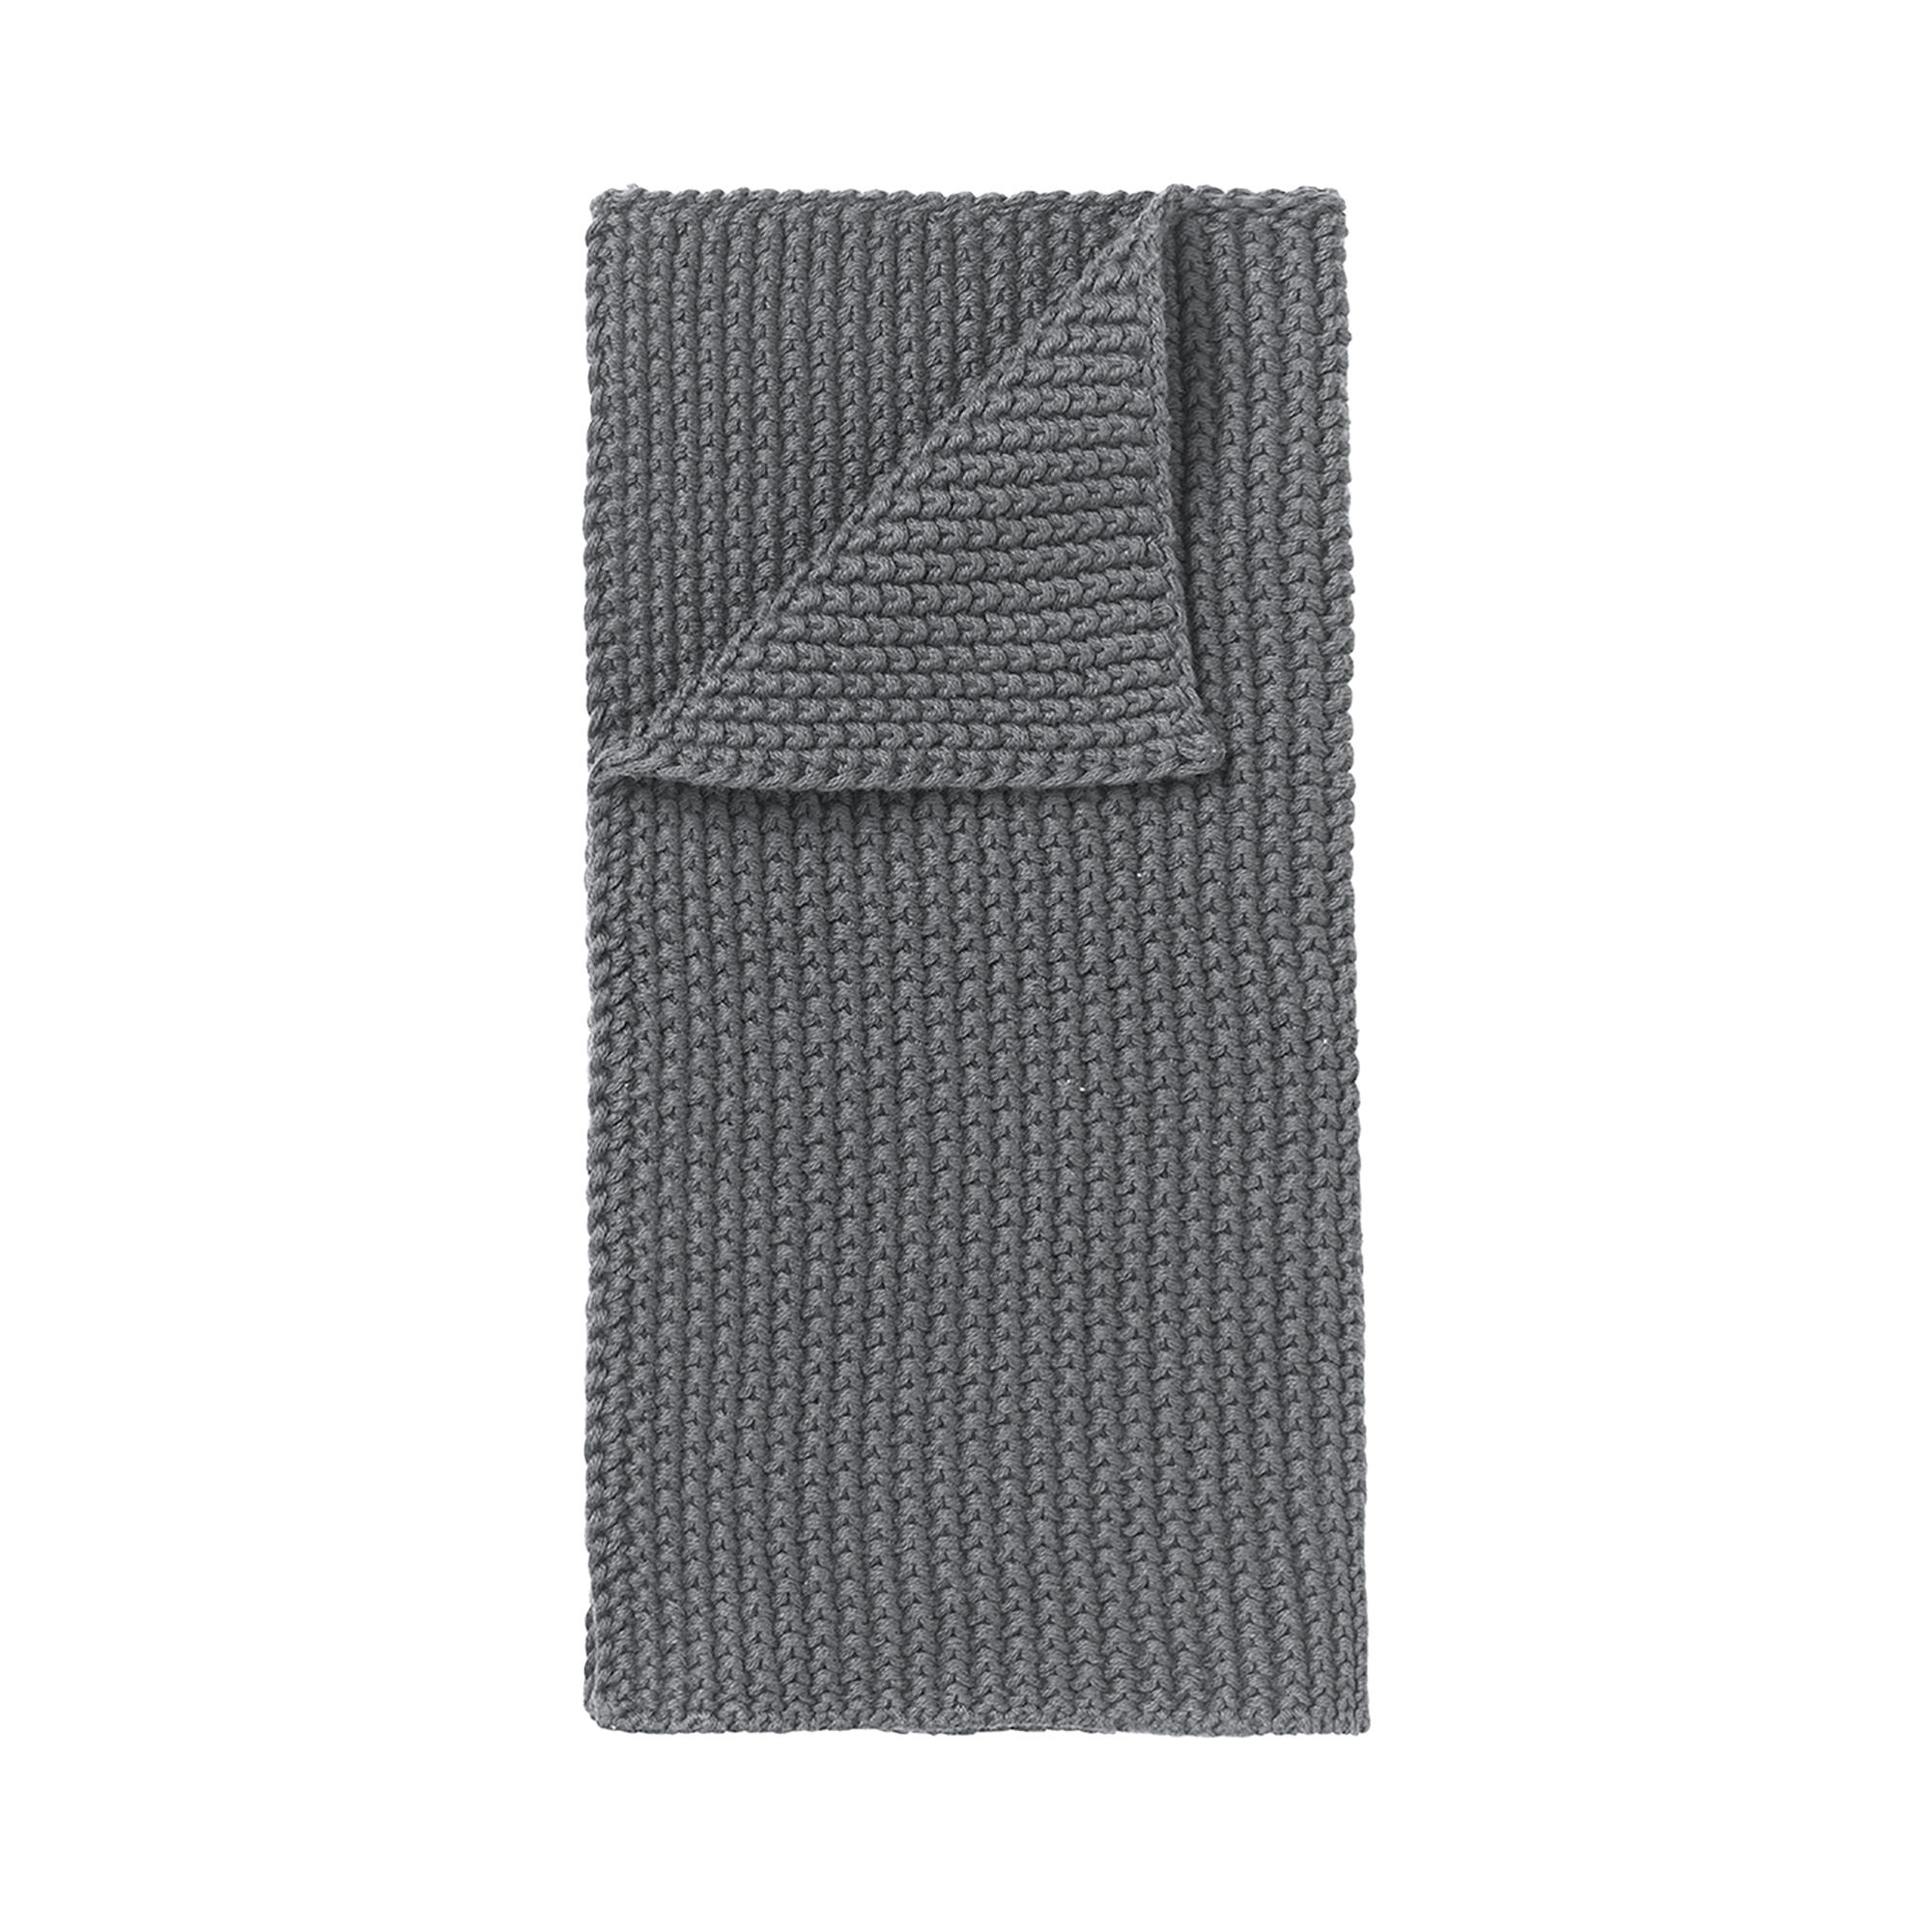 GESCHIRRTUCH - Grau, Basics, Textil (32/55cm) - Blomus